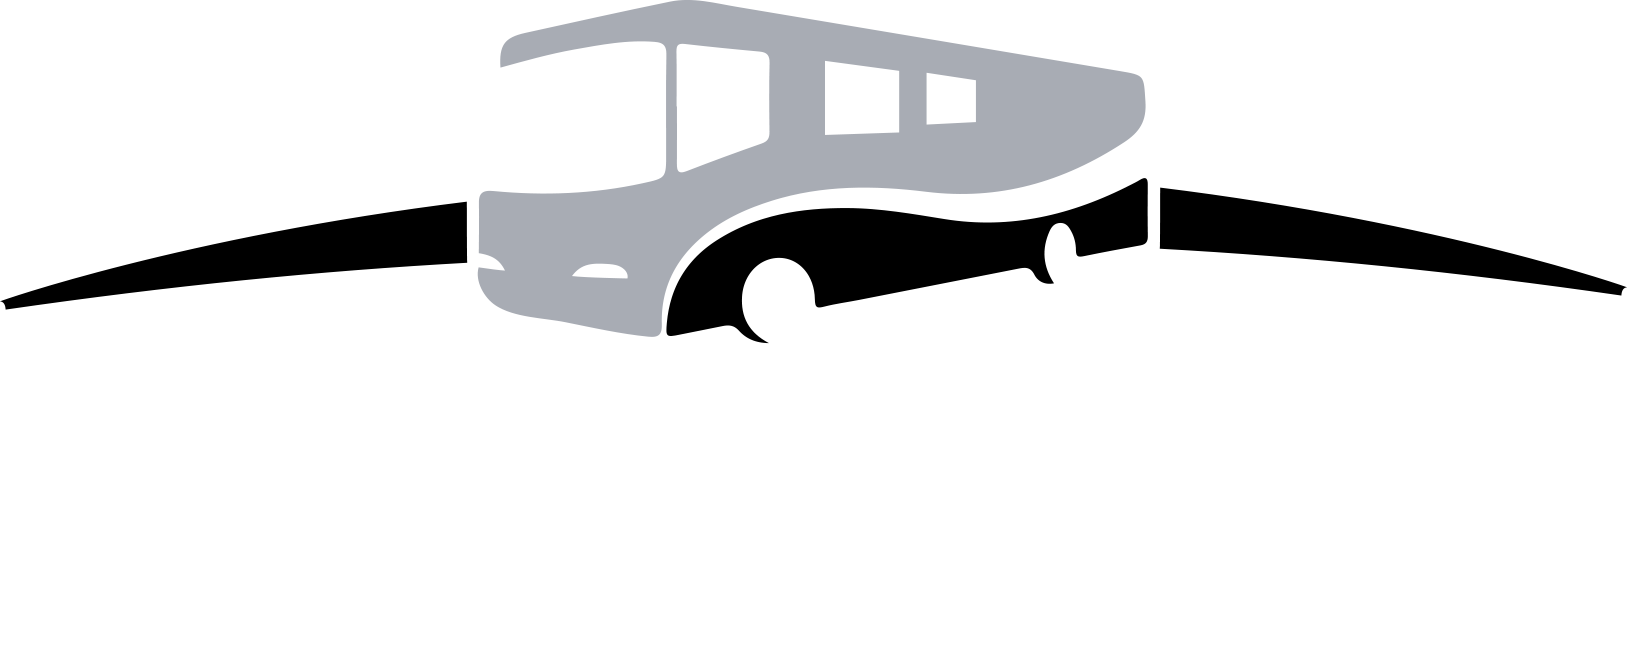 radloff vehicle services logo